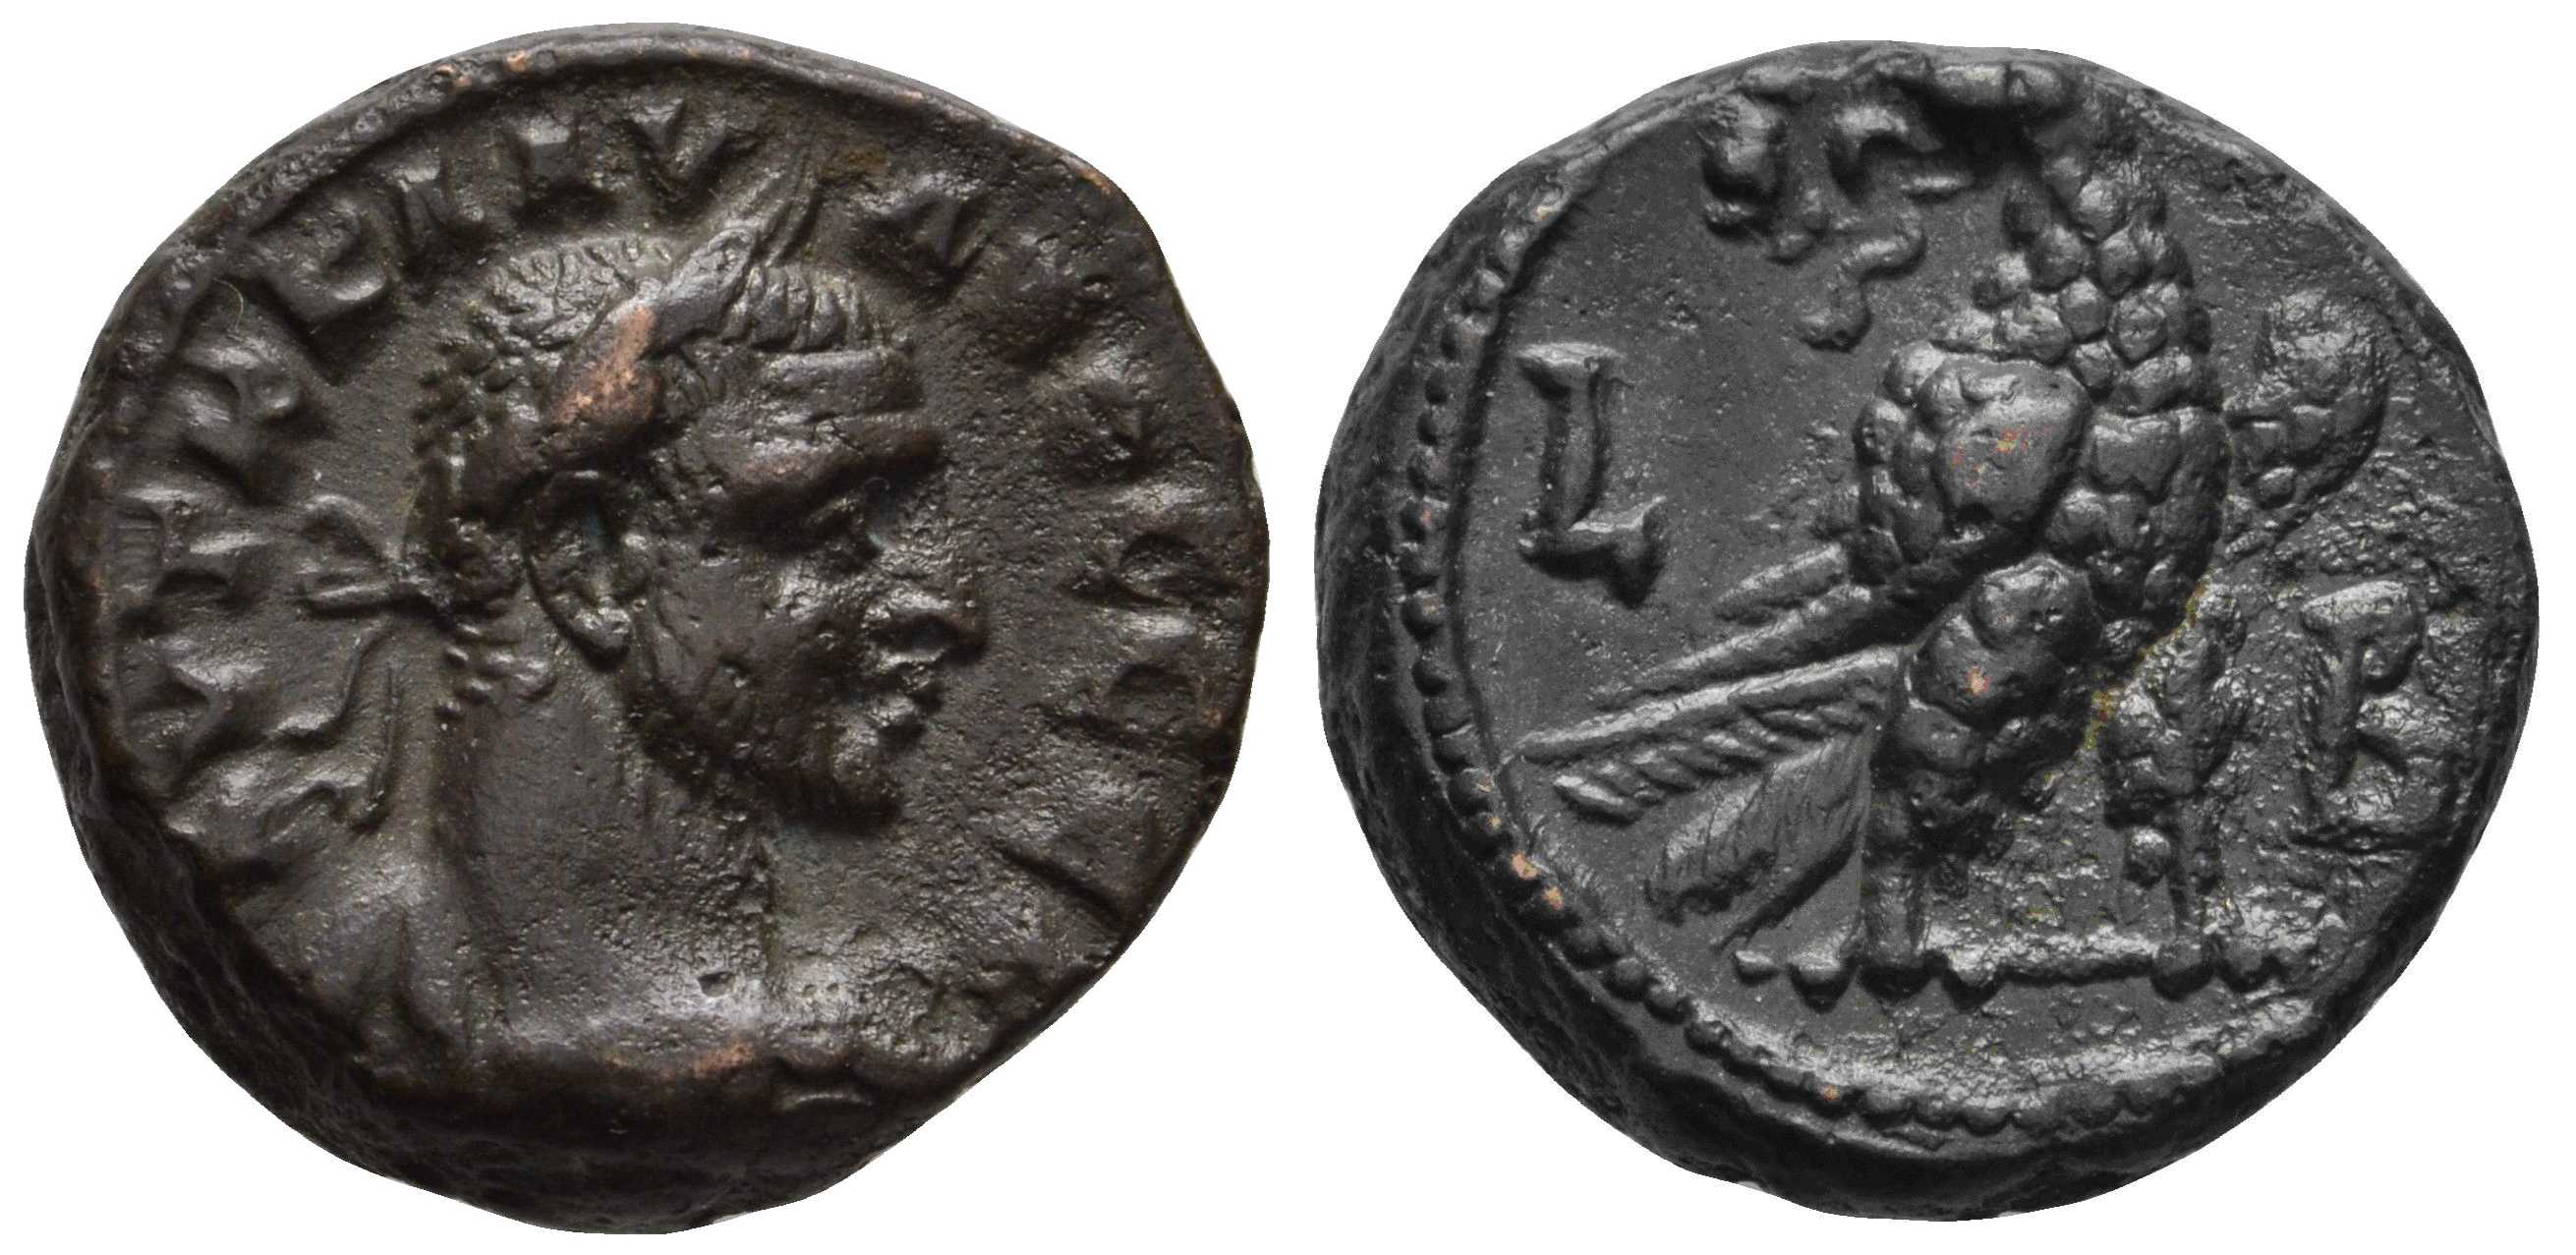 5881 Alexandria Aegyptus Claudius II AE